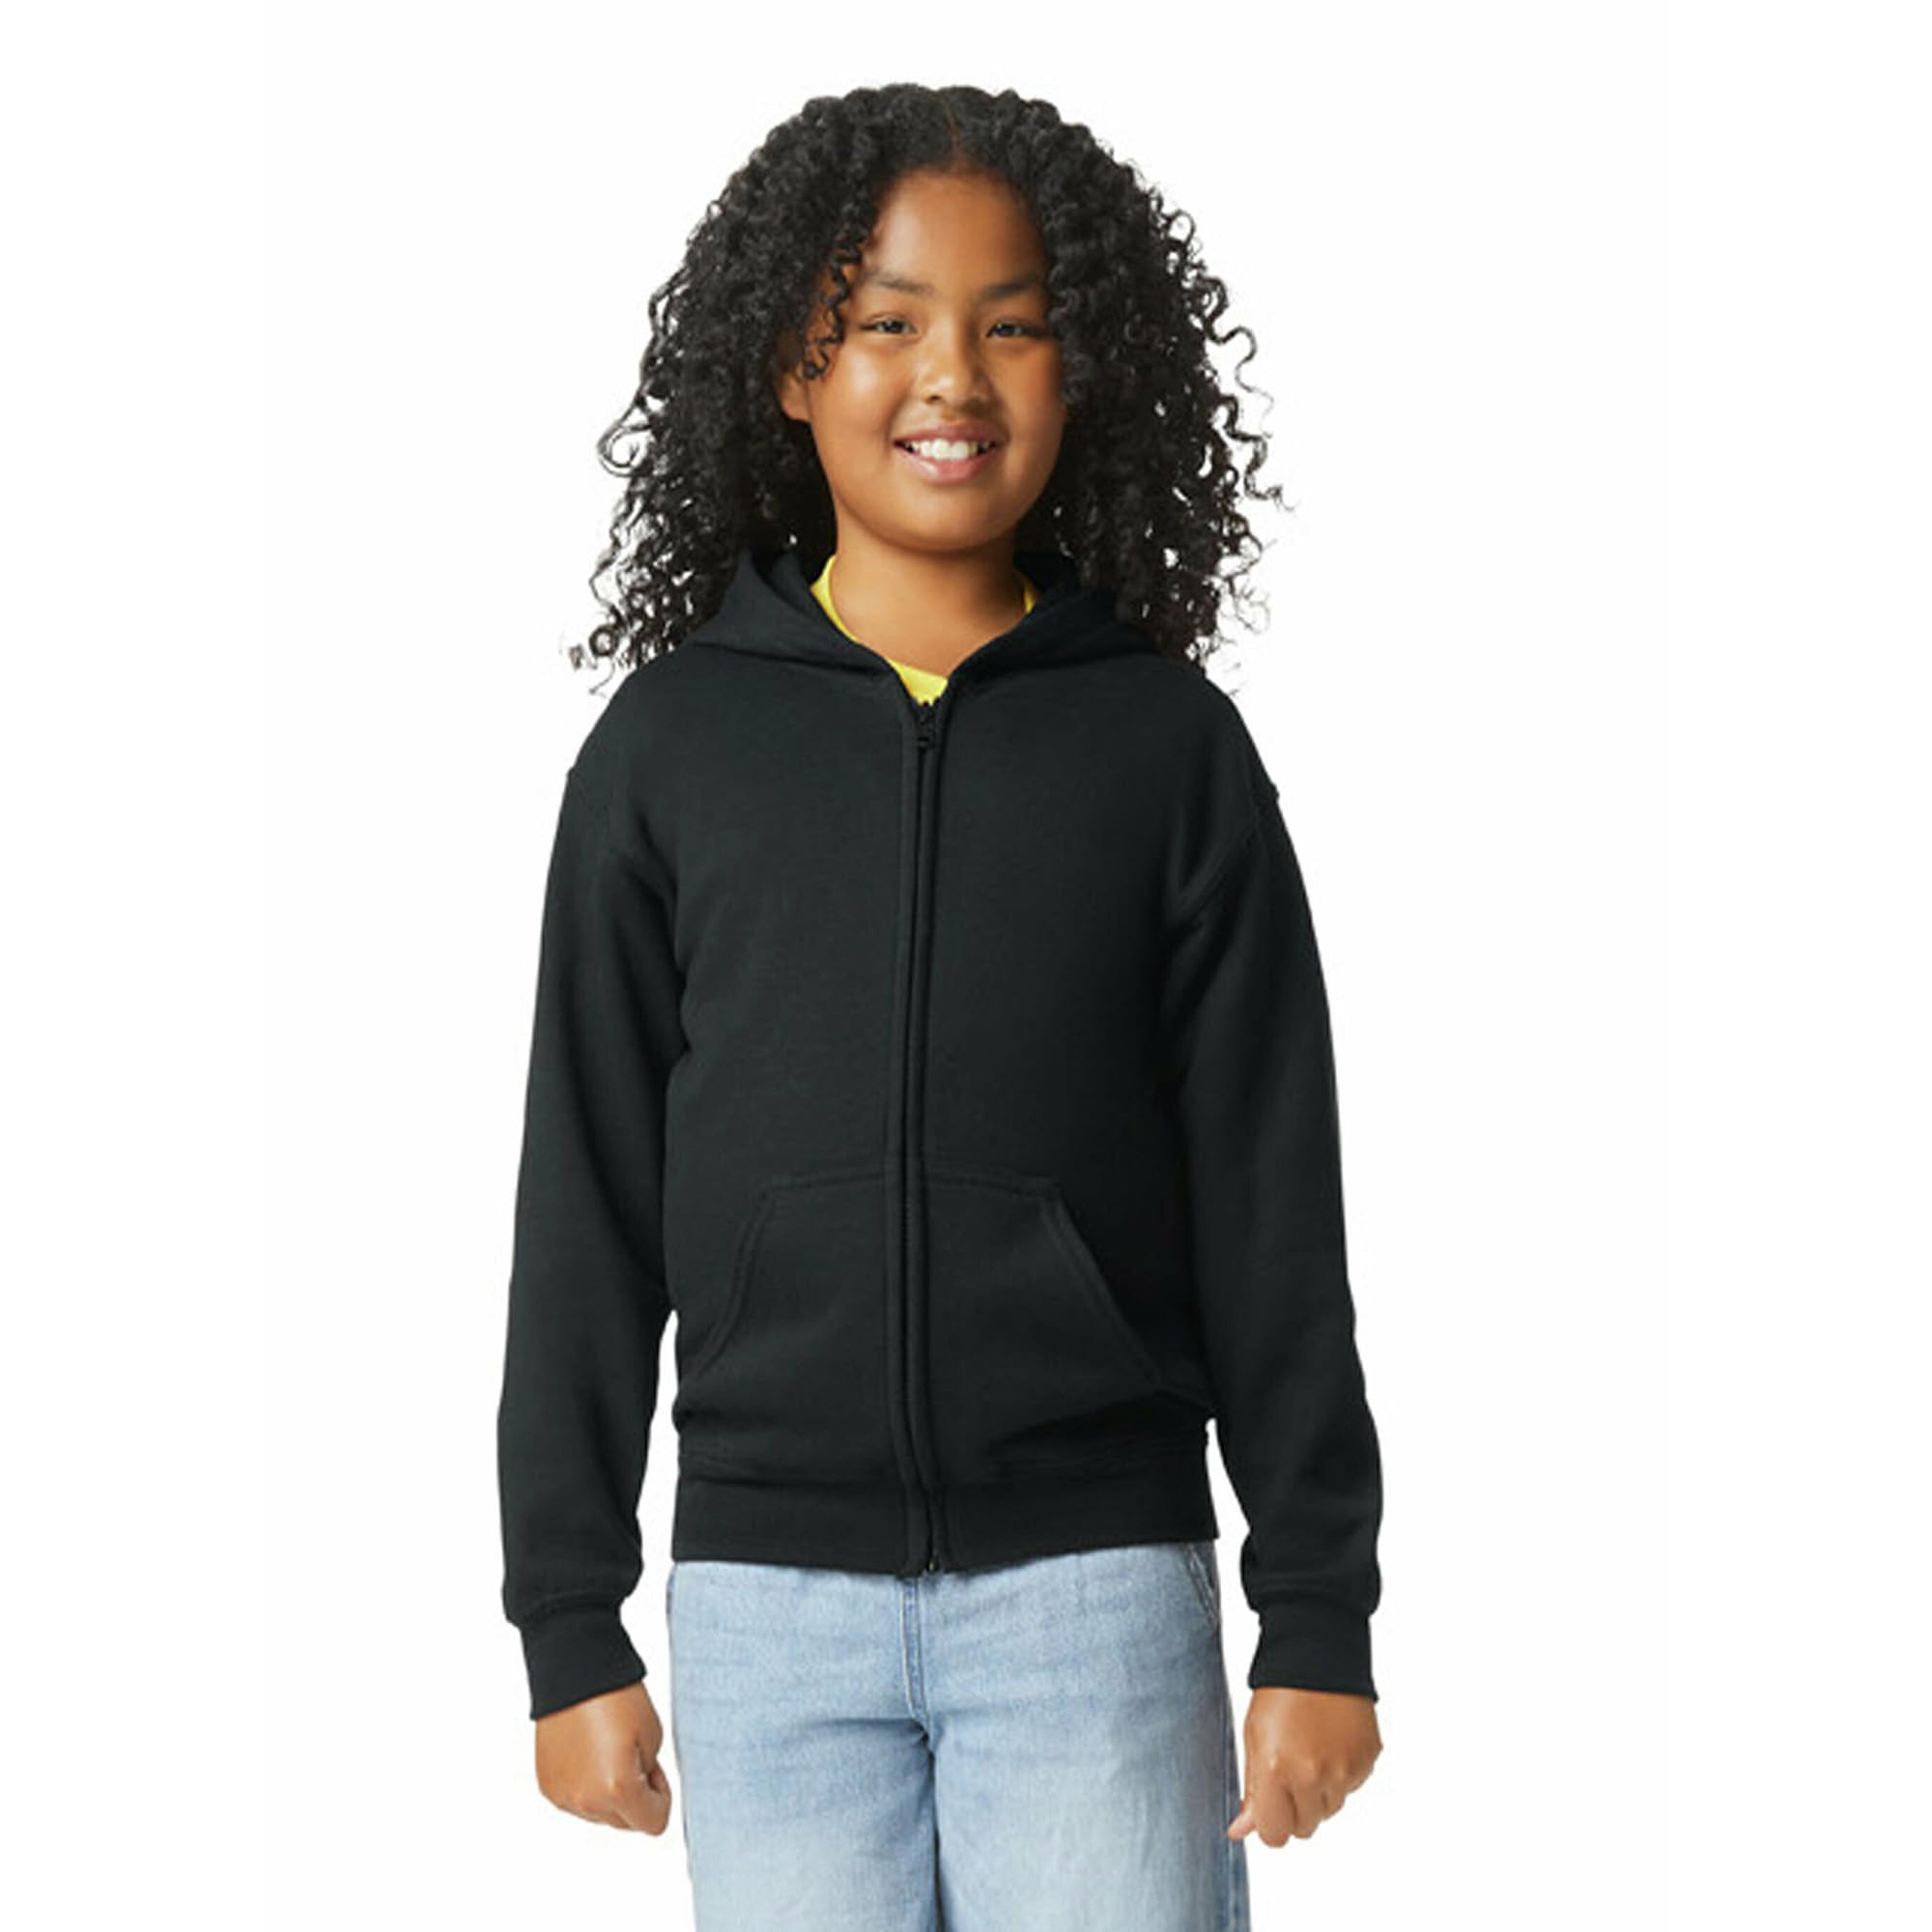 Gildan Youth Full Zip Hooded Sweatshirt, Style G18600B